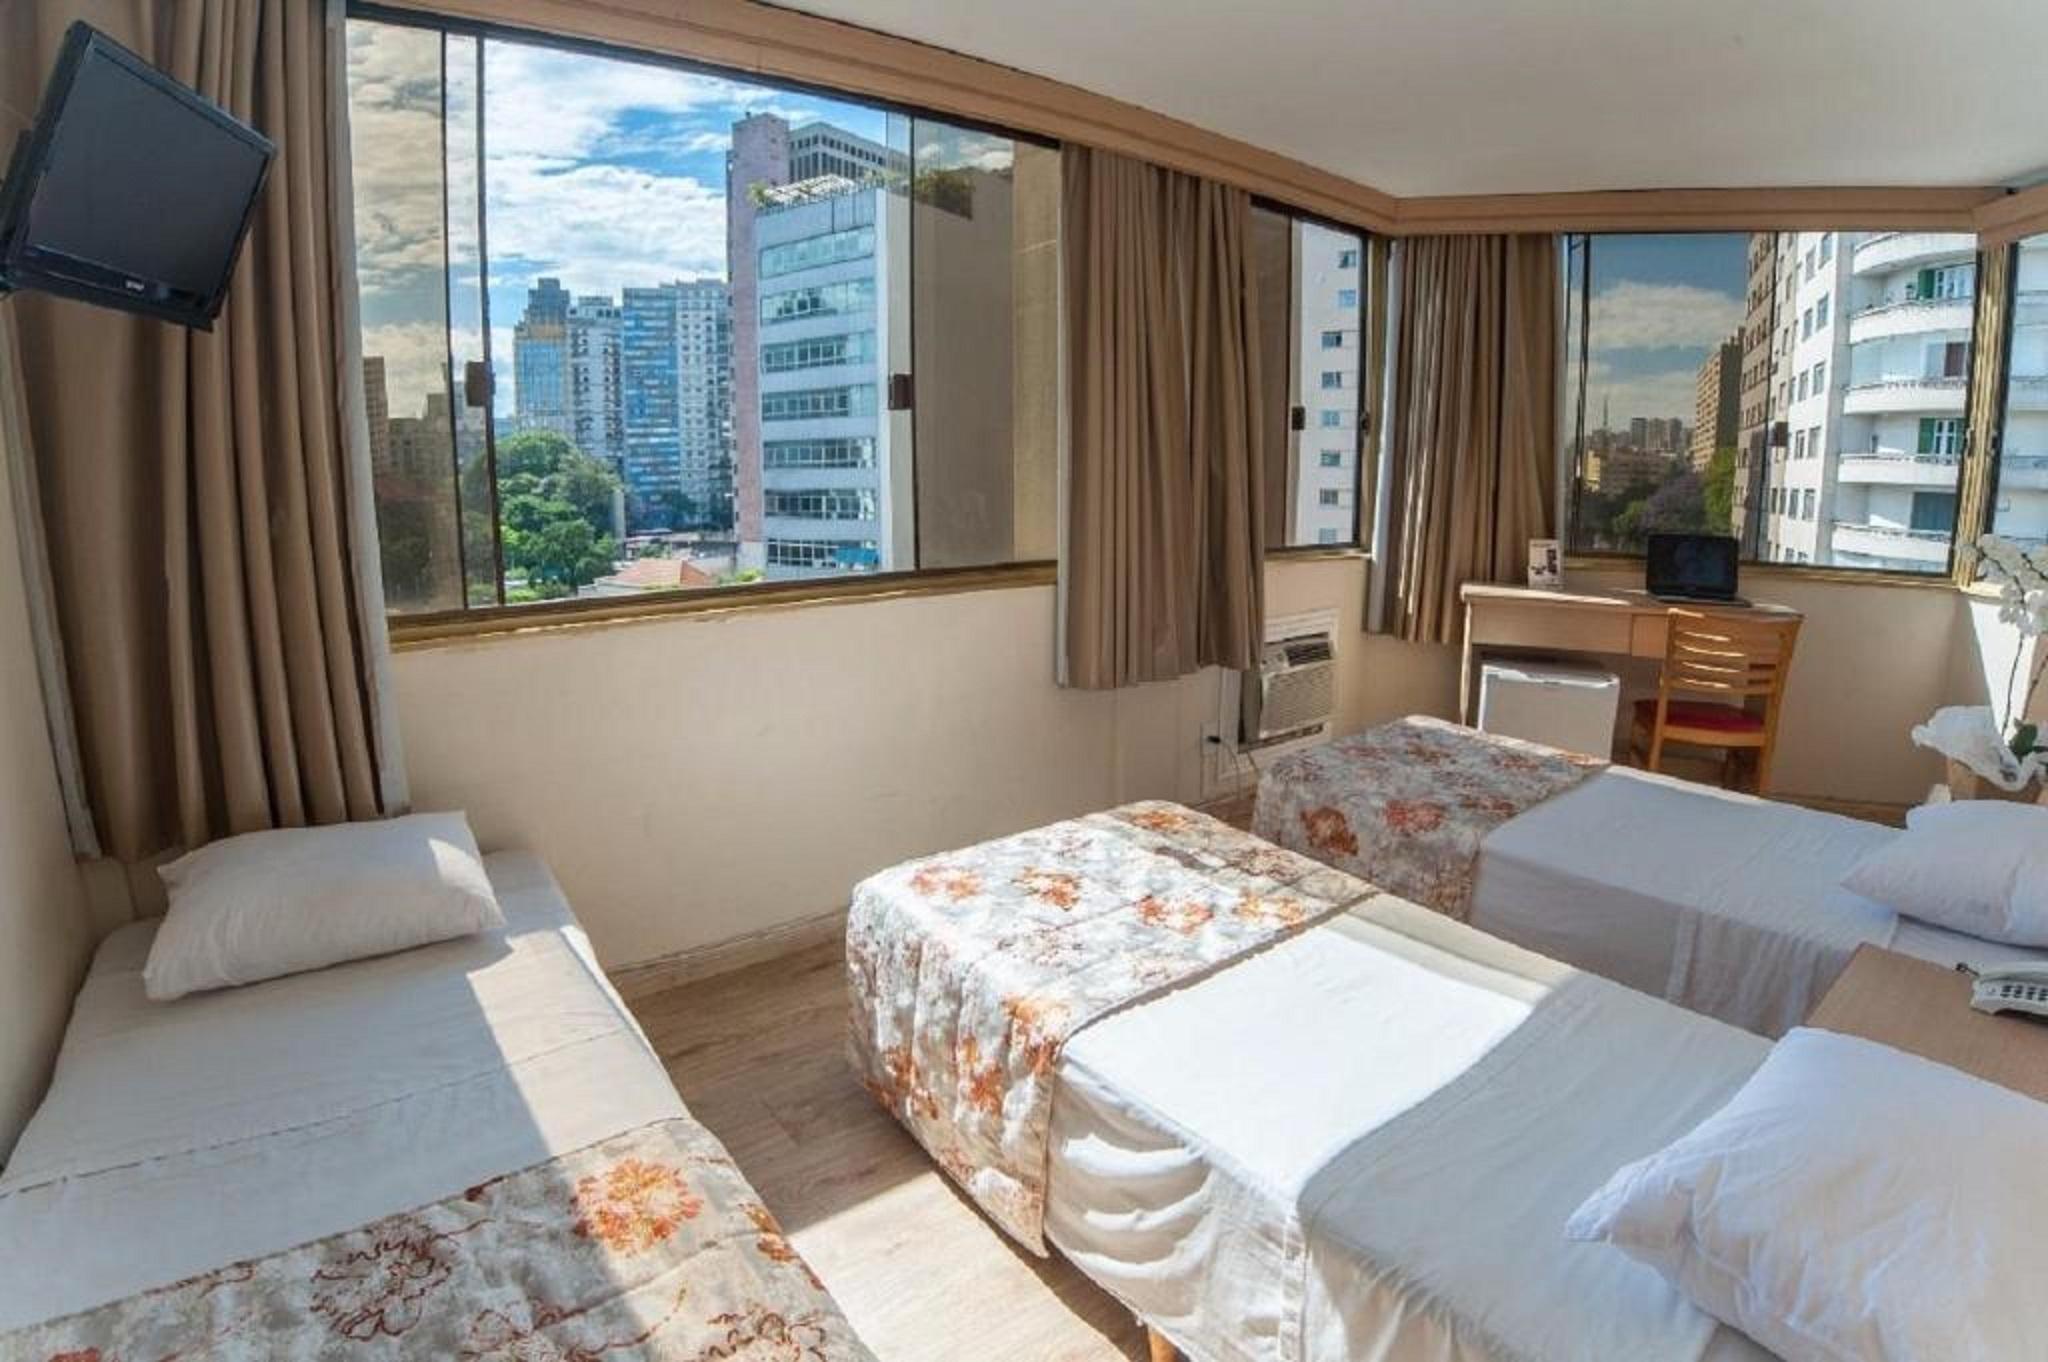 Hotel Dan Inn Sao Paulo Higienopolis - Metro Mackenzie 외부 사진